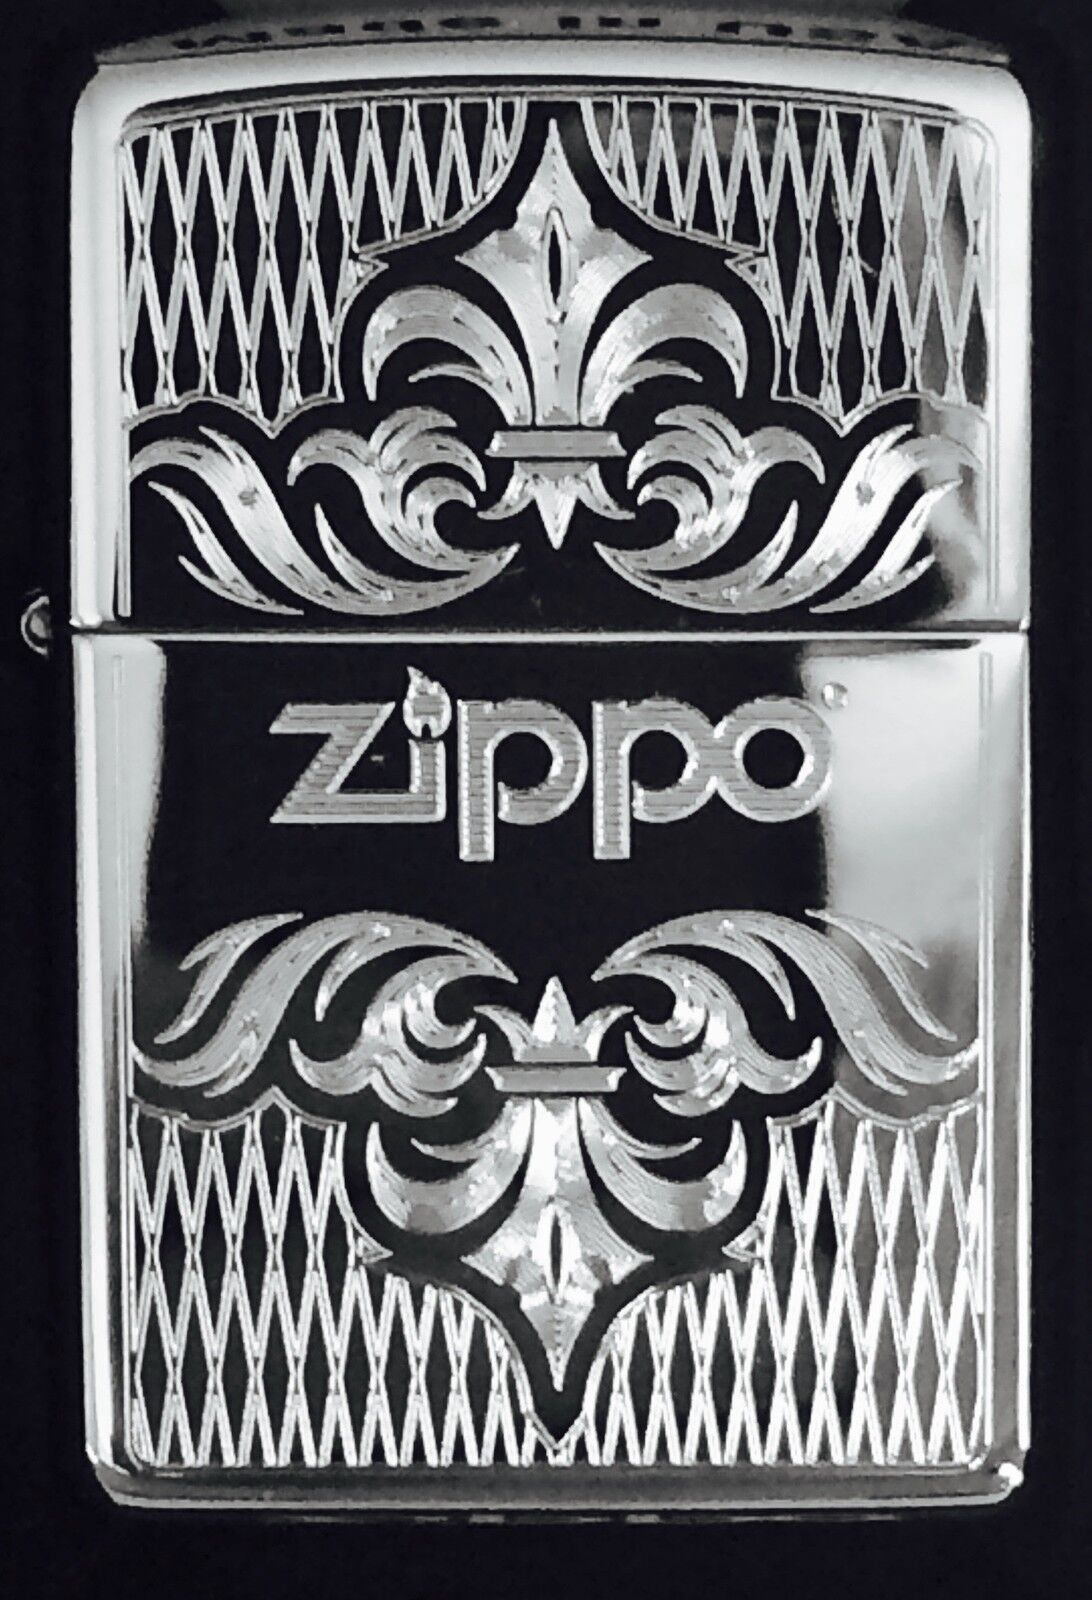 Zippo Windproof Chrome Lighter With Regal Design & Zippo Logo, 51154, New In Box